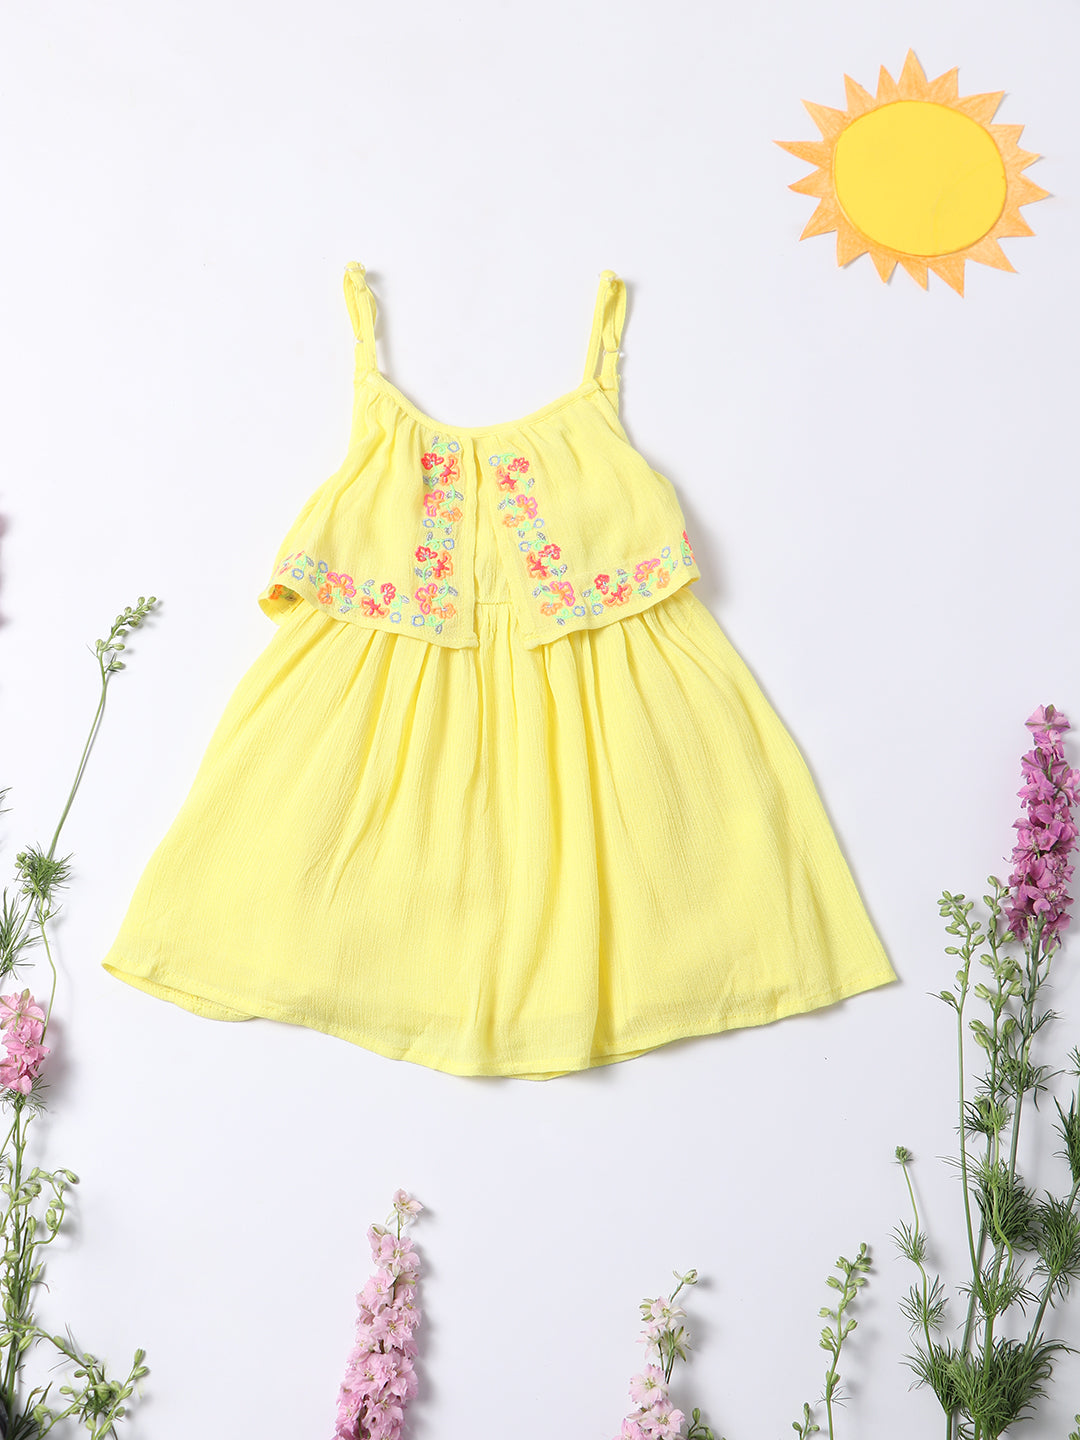 Nautinati Girls Yellow Solid Layered A-Line Dress